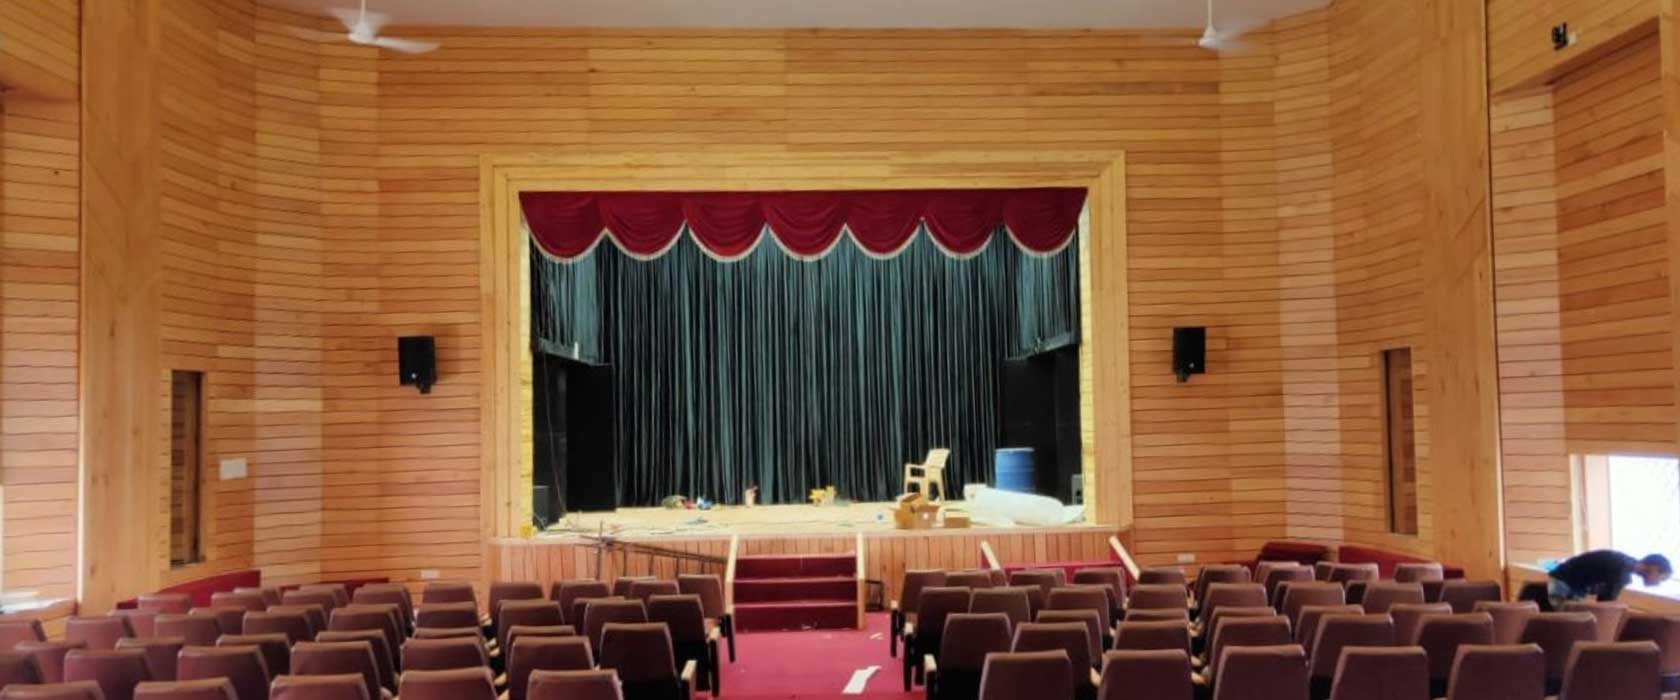 gandhi-memorial-auditorium-built-using-export-canadian-timber-wood-products